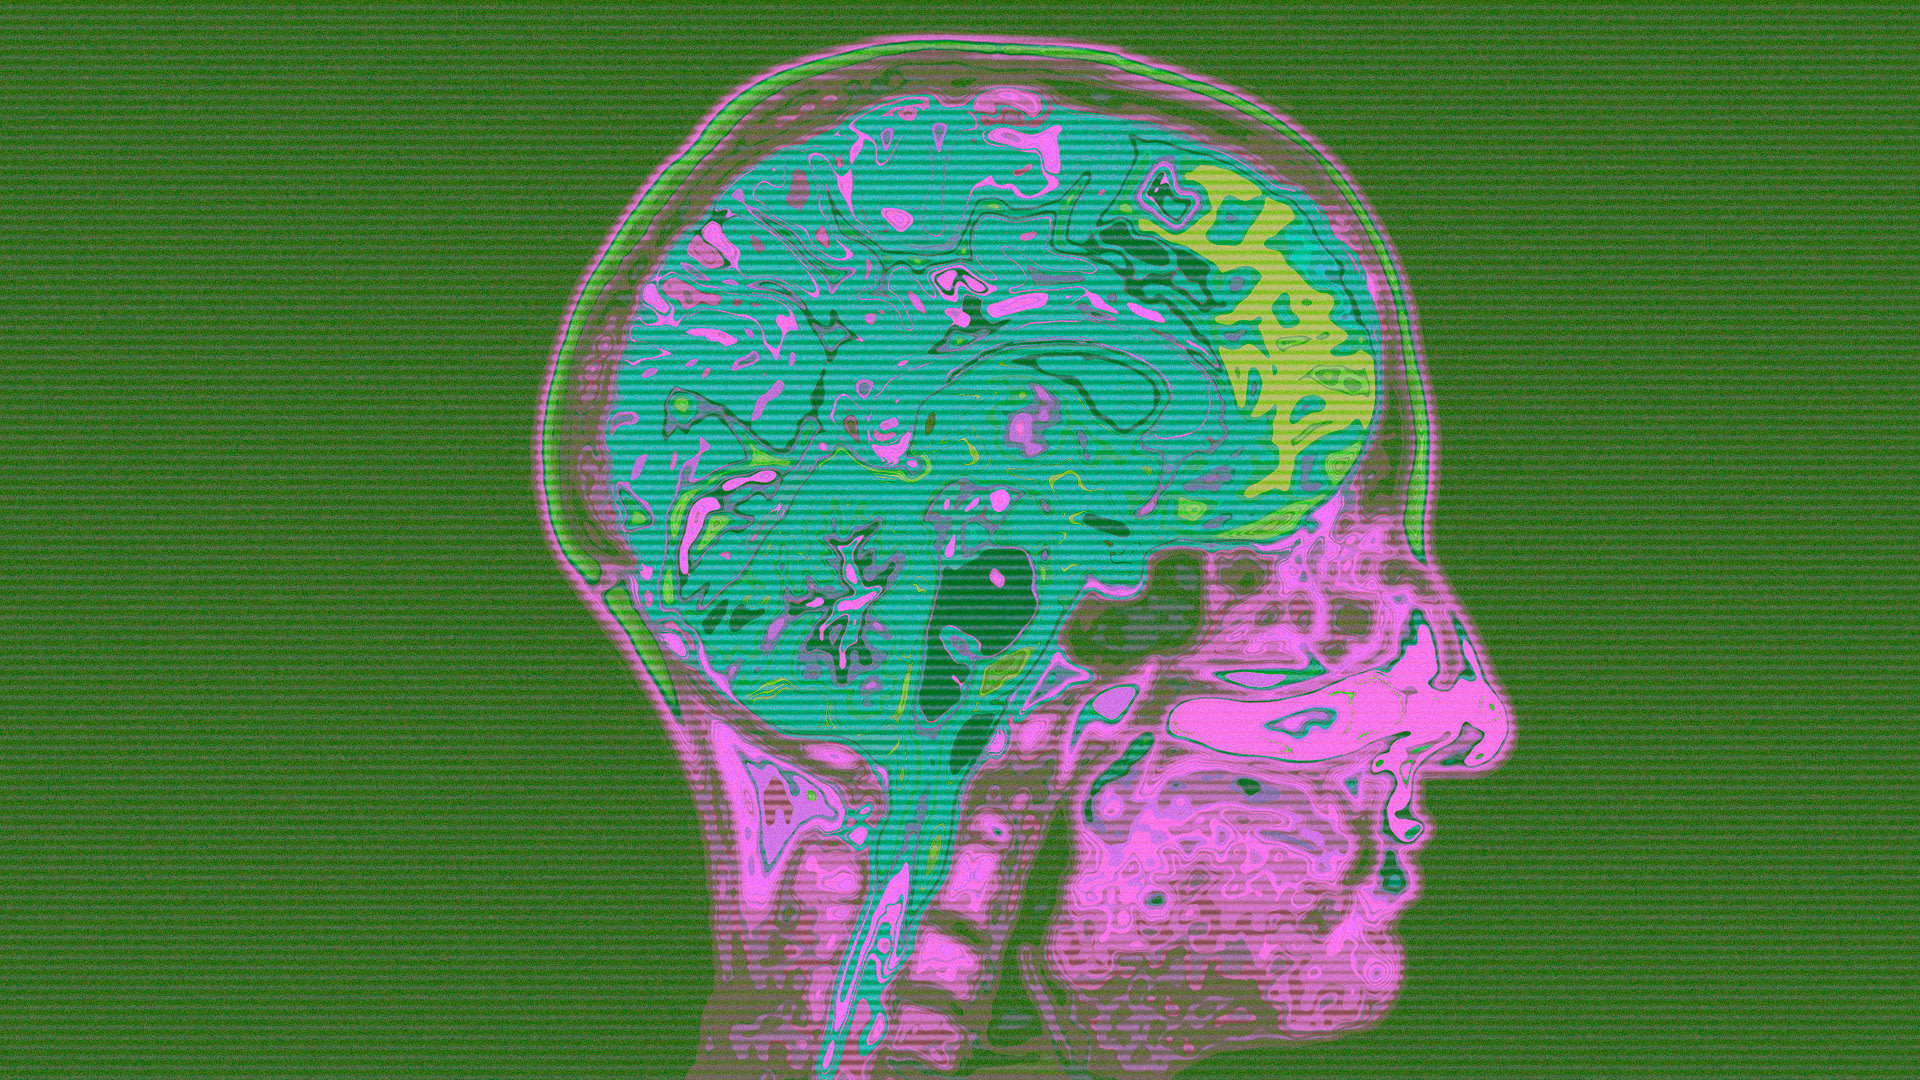 Three hacks to help your brain learn stuff faster